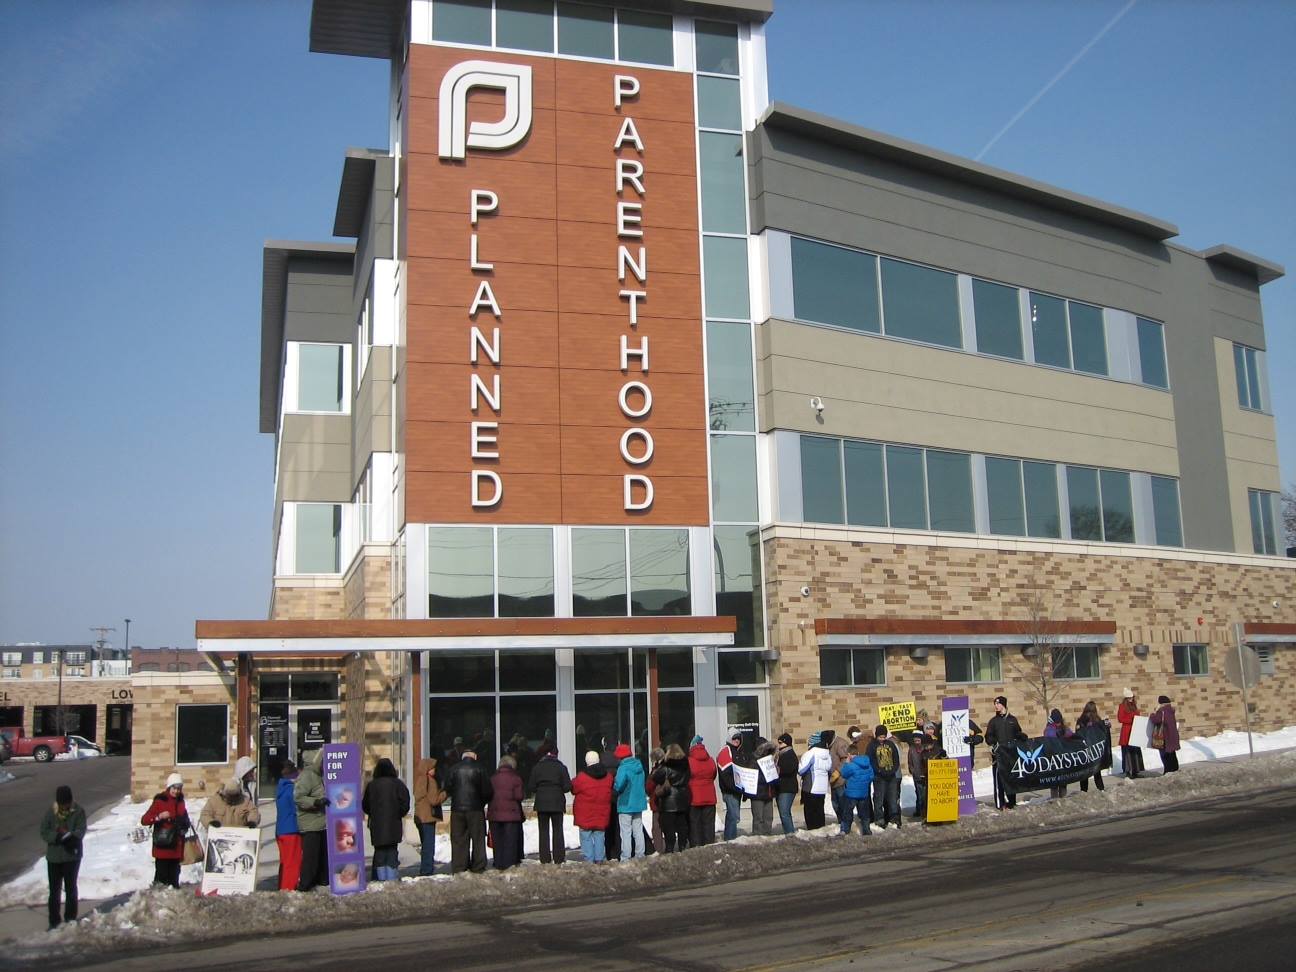 Planned Parenthood’s BIG LIE: Prenatal care is “virtually nonexistent”